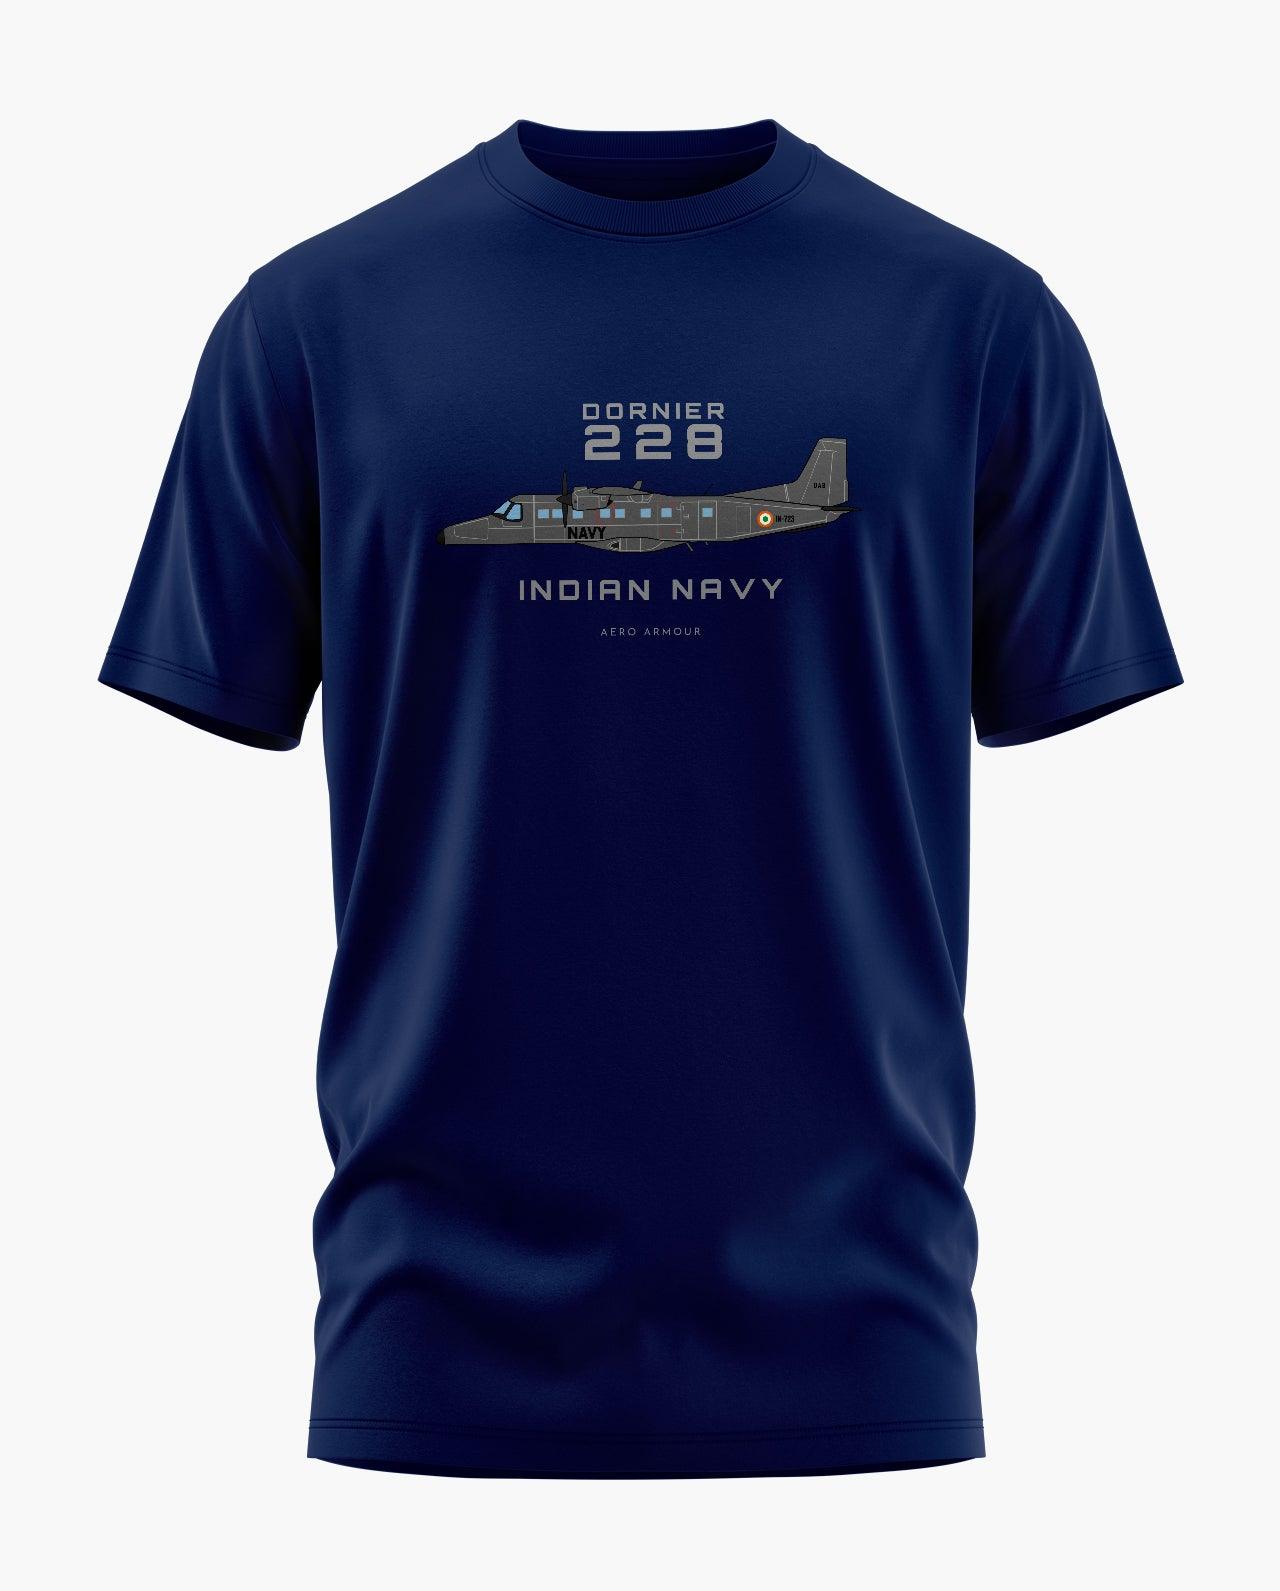 Dornier 228 Indian Navy T-Shirt - Aero Armour